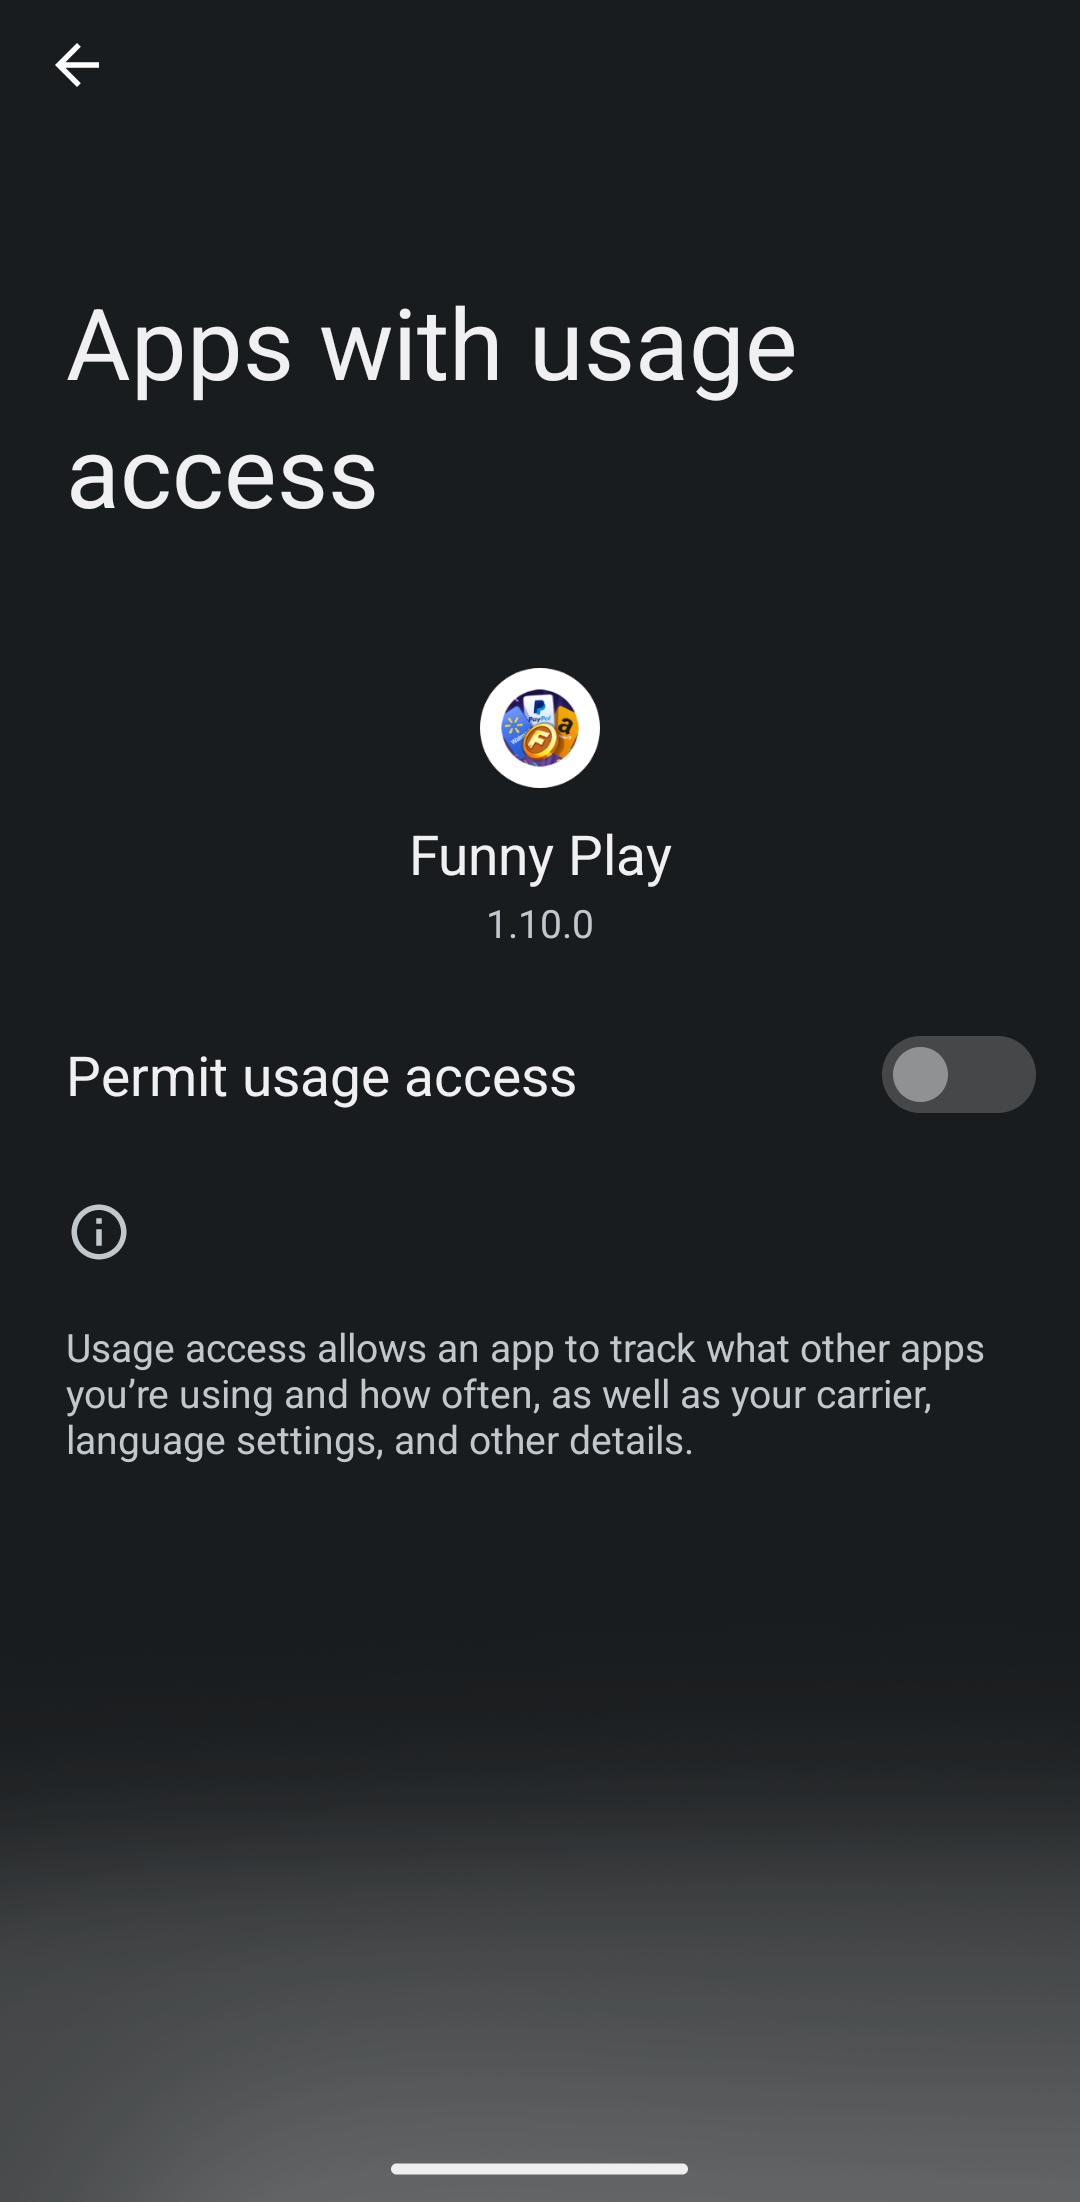 Funny Play App Usage permission